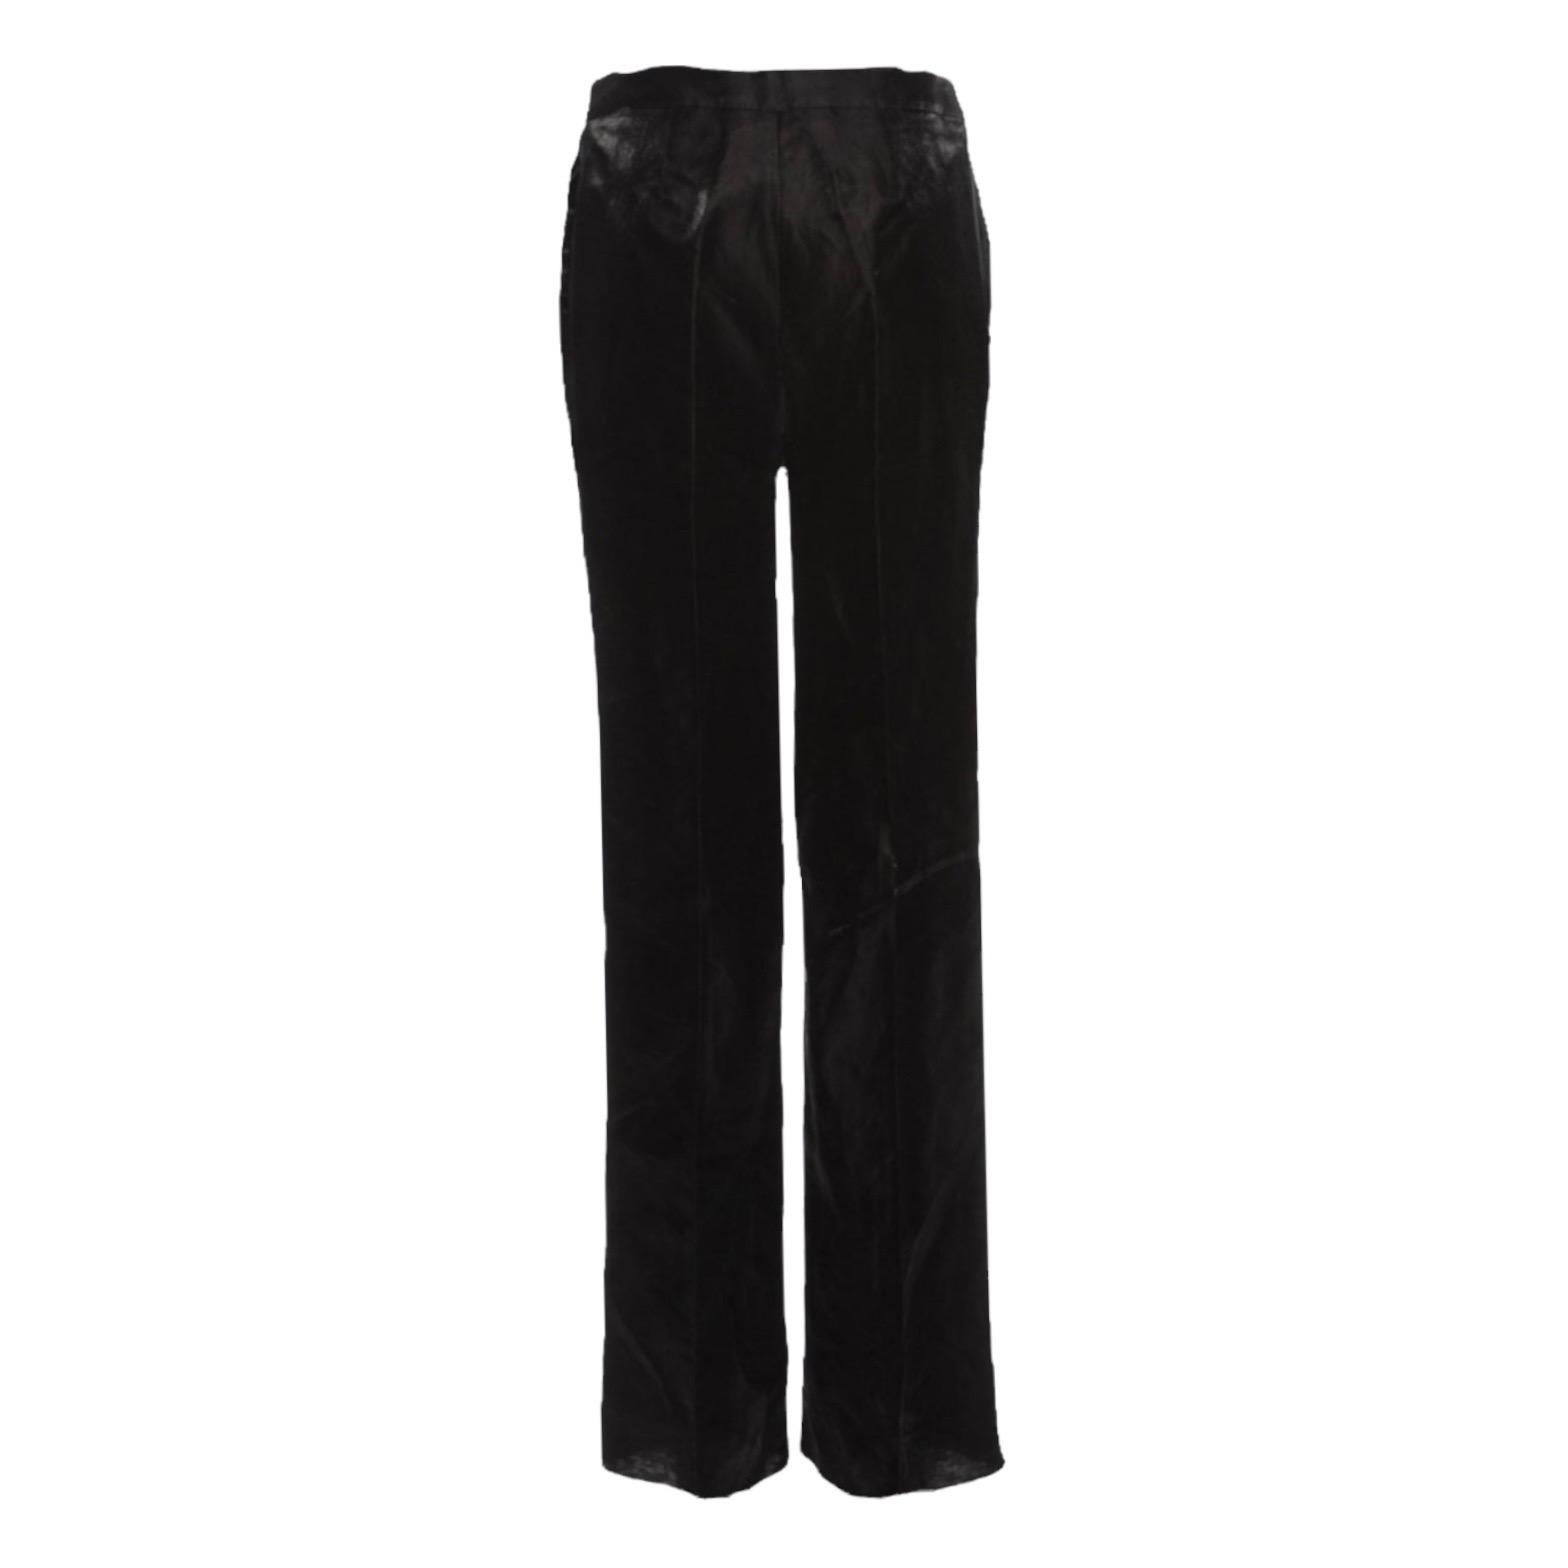 CHANEL Black Shimmering Linen Evening Pants Jacket Suit Tuxedo Smoking 42-44 For Sale 5